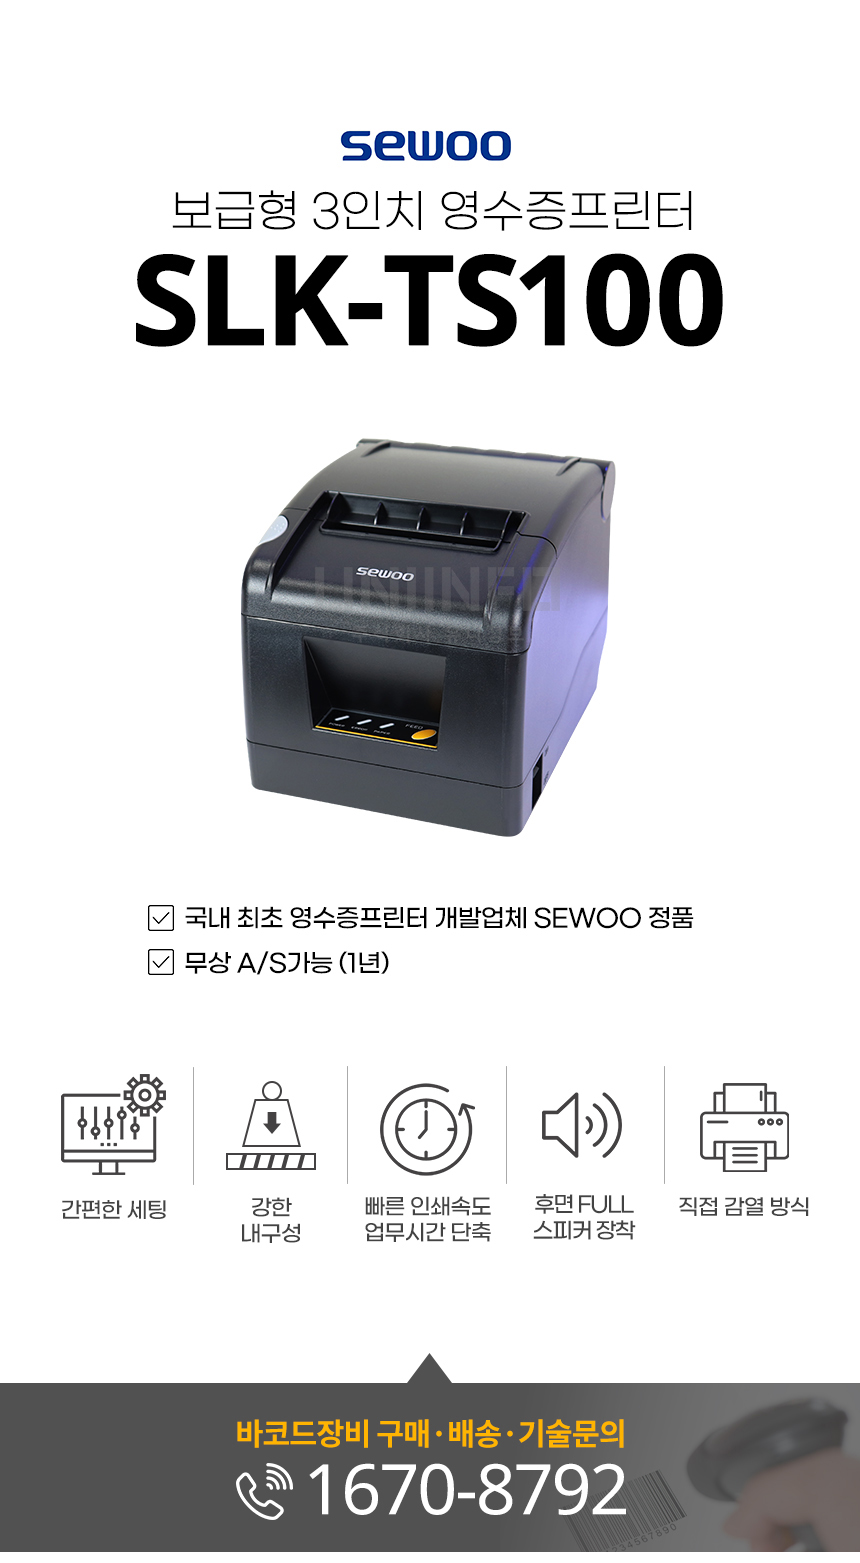 SLK-TS100 세우테크 보급형 3인치 영수증 프린터 무상 as 1년 가능 간편한 세팅 강한 내구성 직접 감열 방식 빠른 인쇄 속도